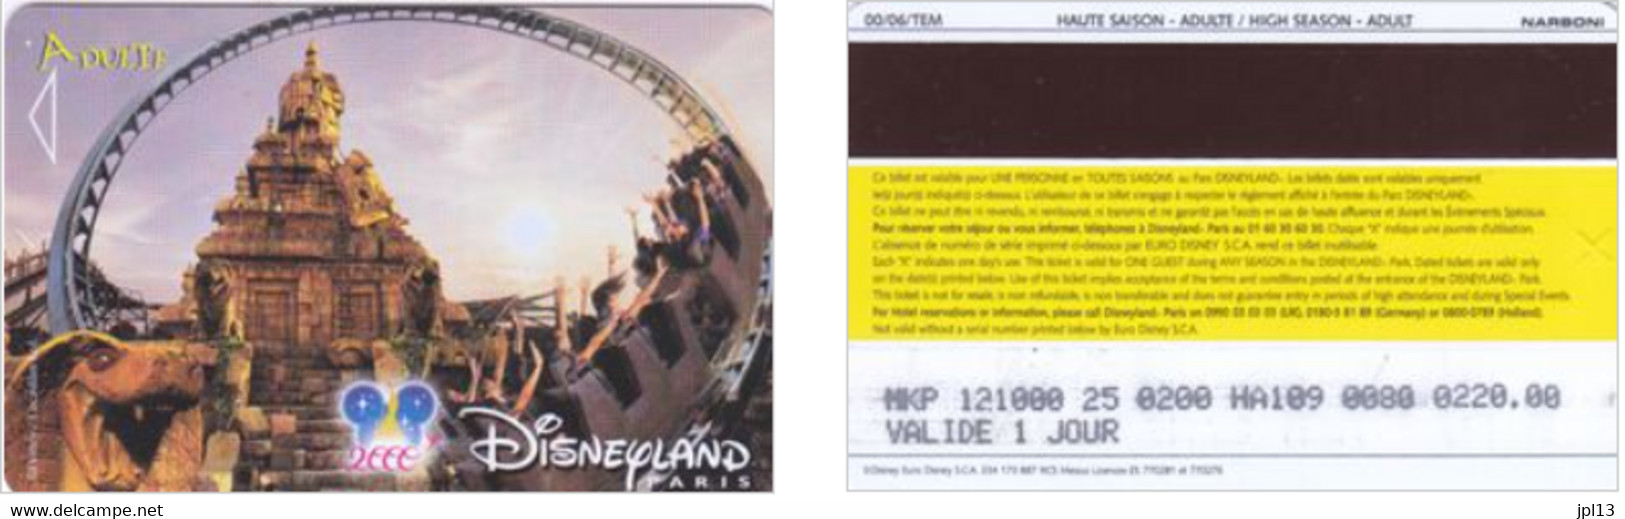 Passeport Disney - France - Disneyland Paris - 2000 - Disney-Pässe